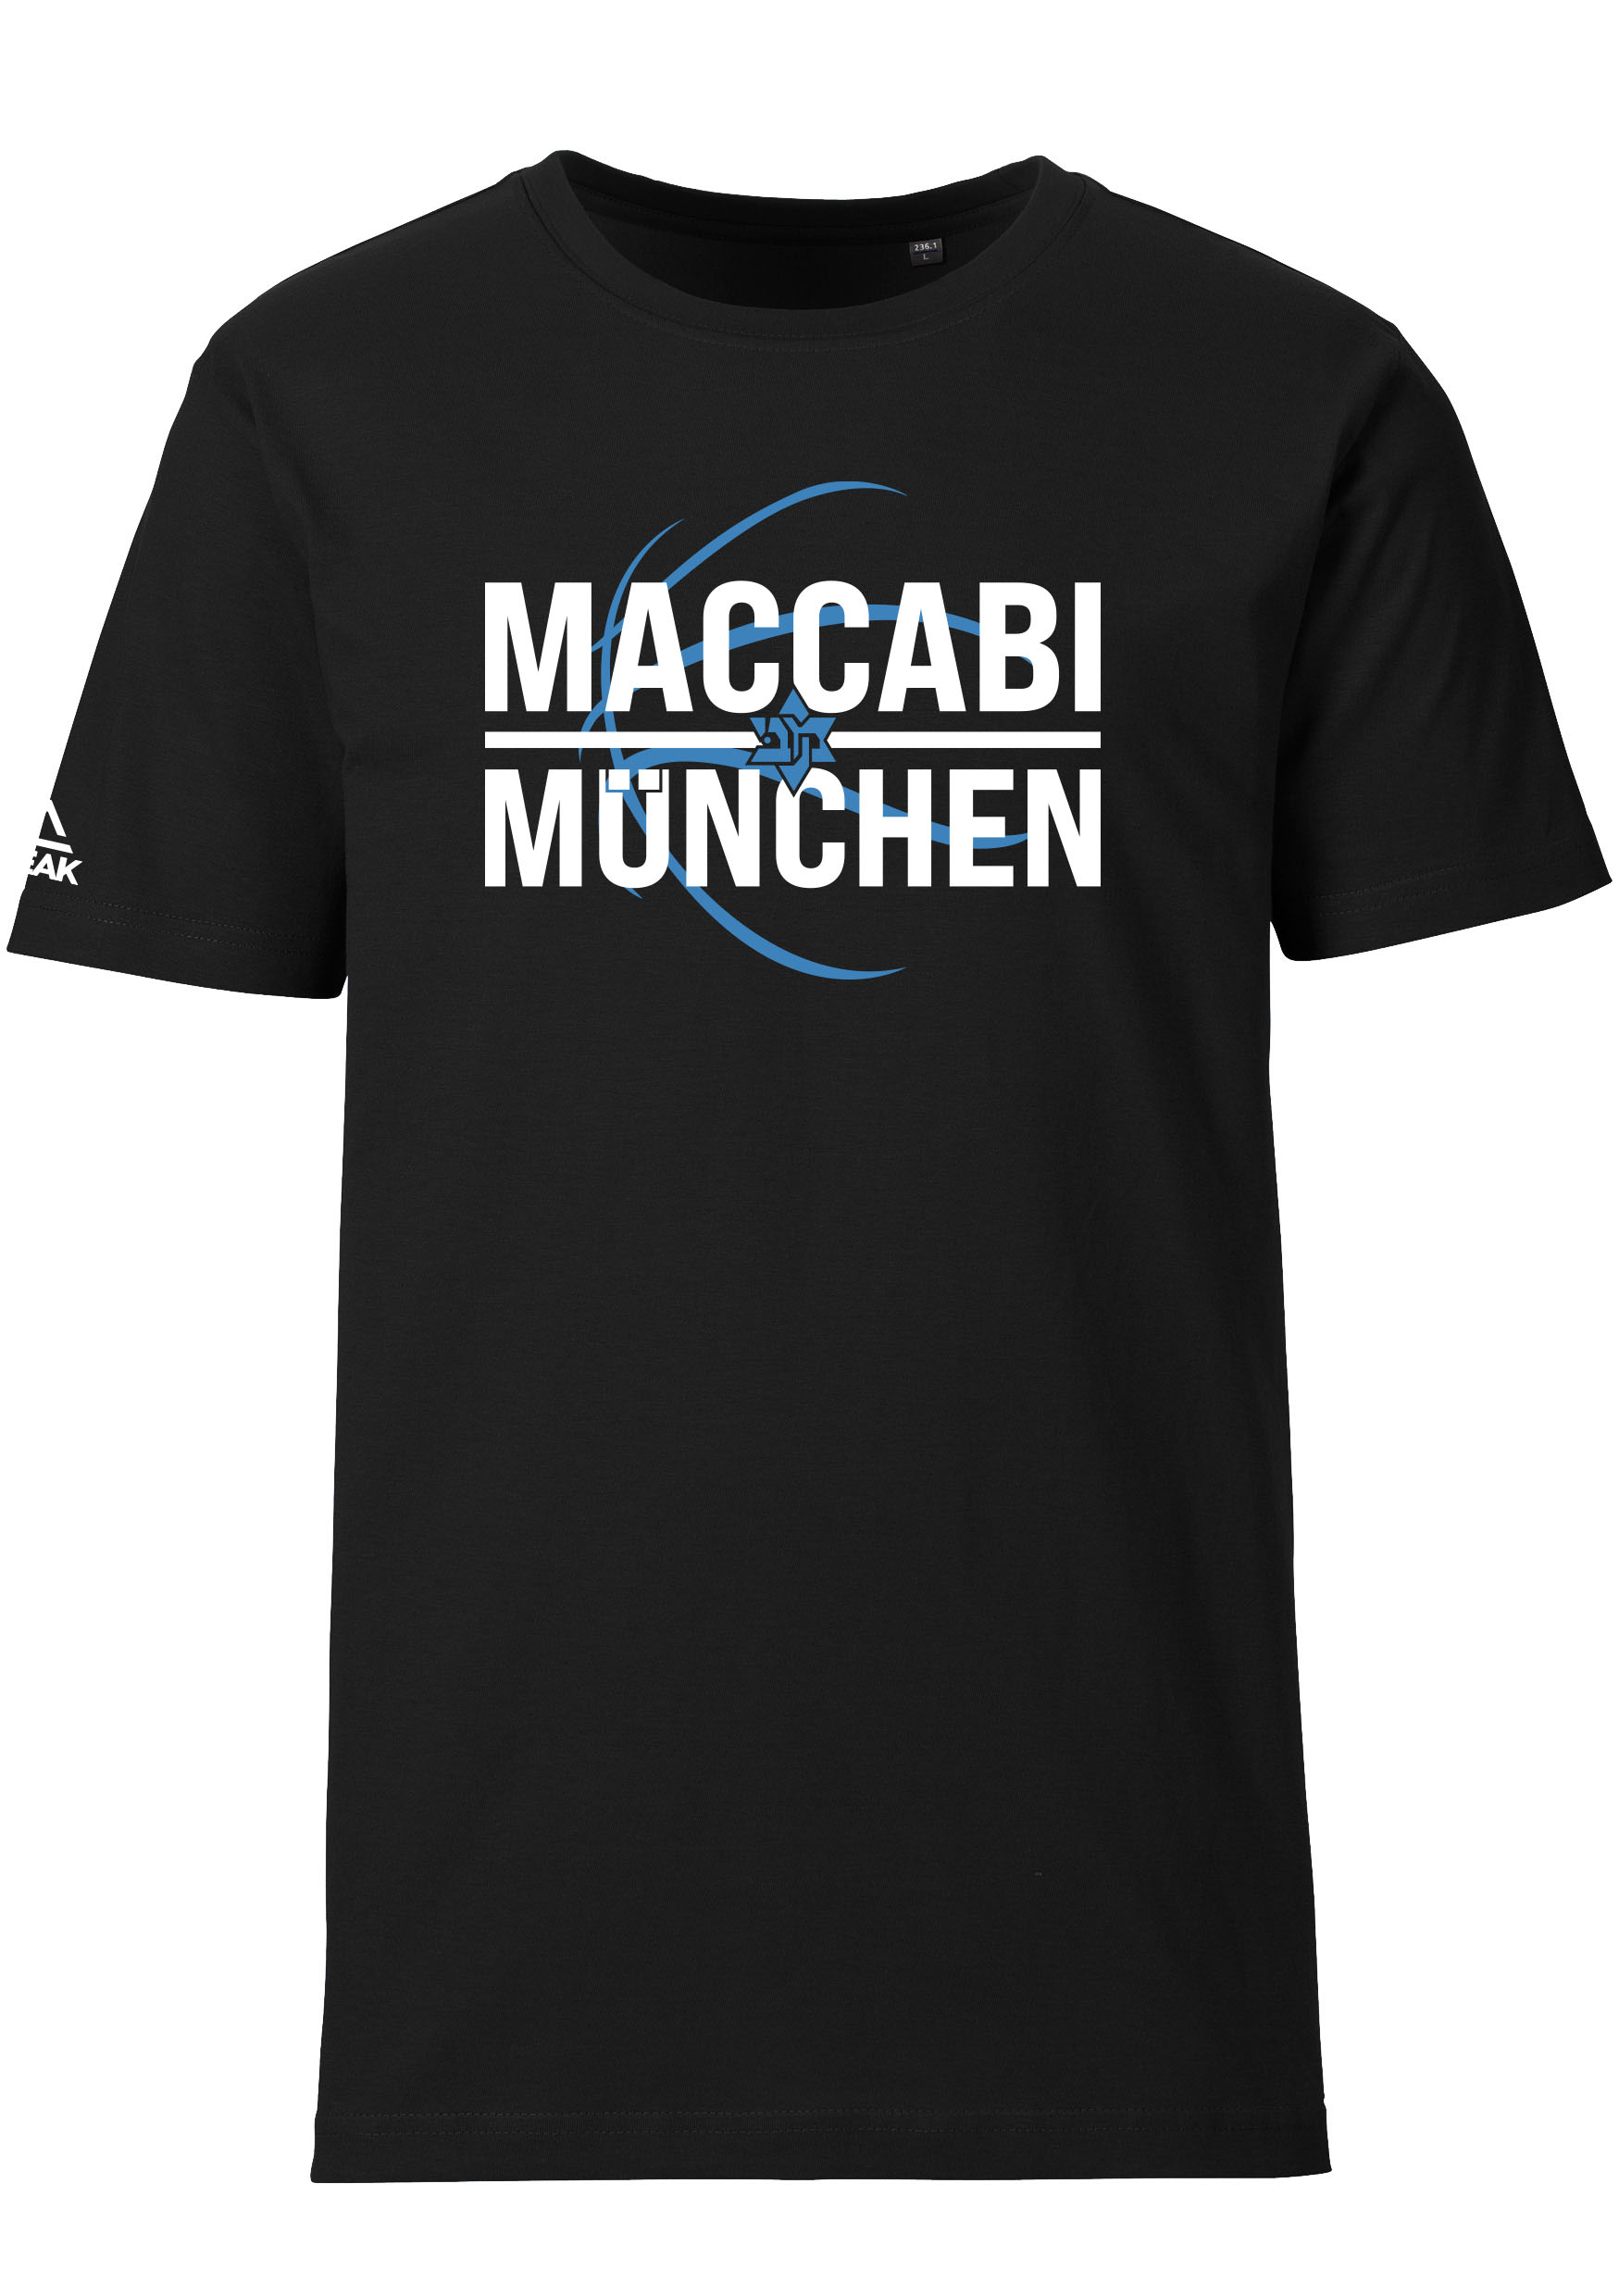 Maccabi München T-Shirt schwarz